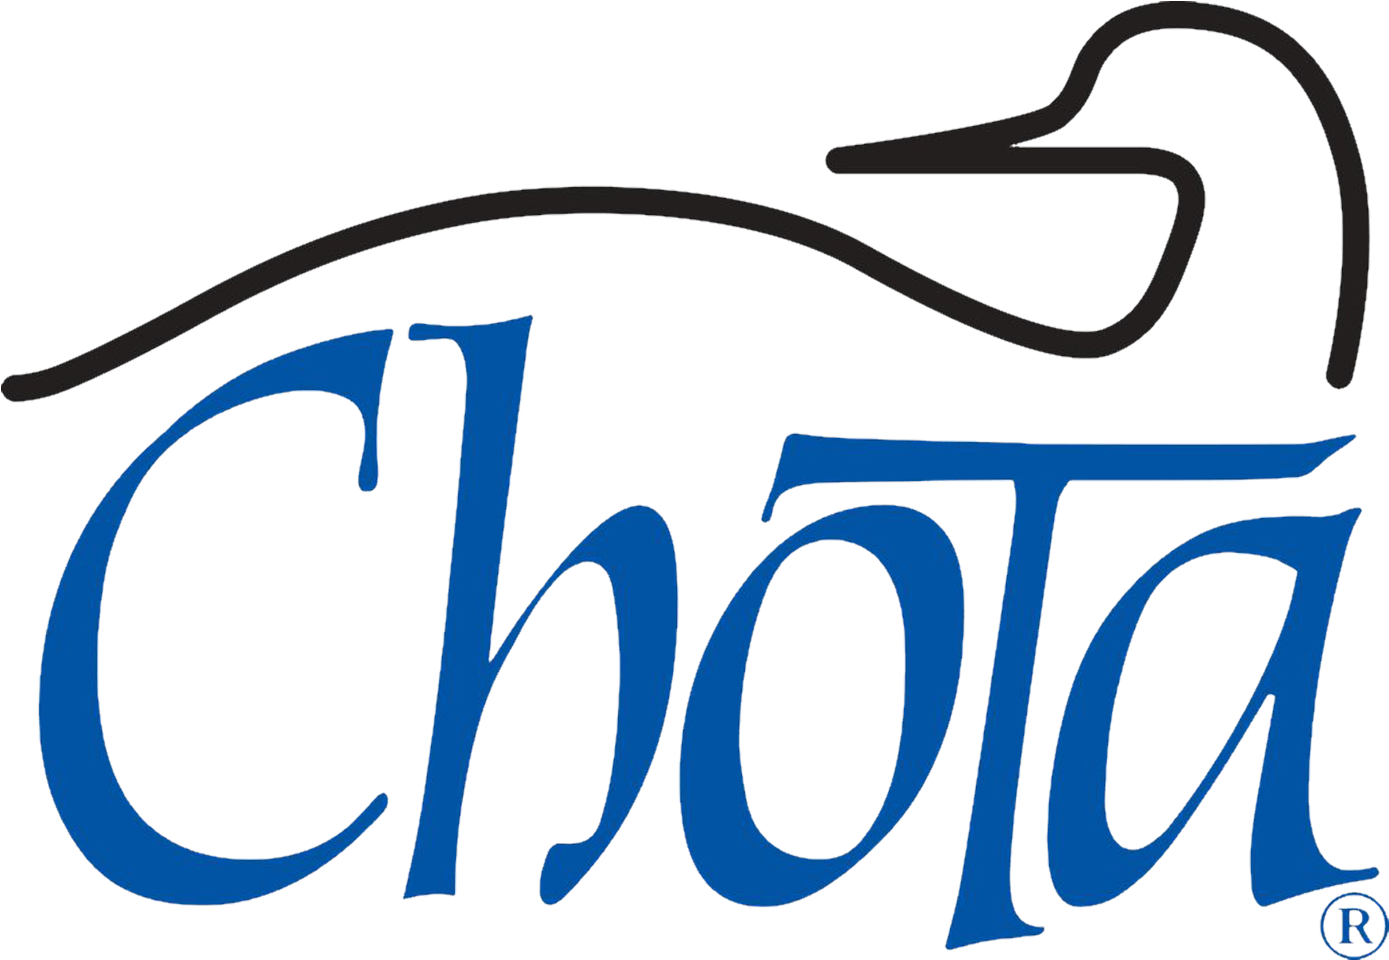 Chota Outdoor Gear - Chota Stl Replacement Cleats: Cl350 (1456x1260)